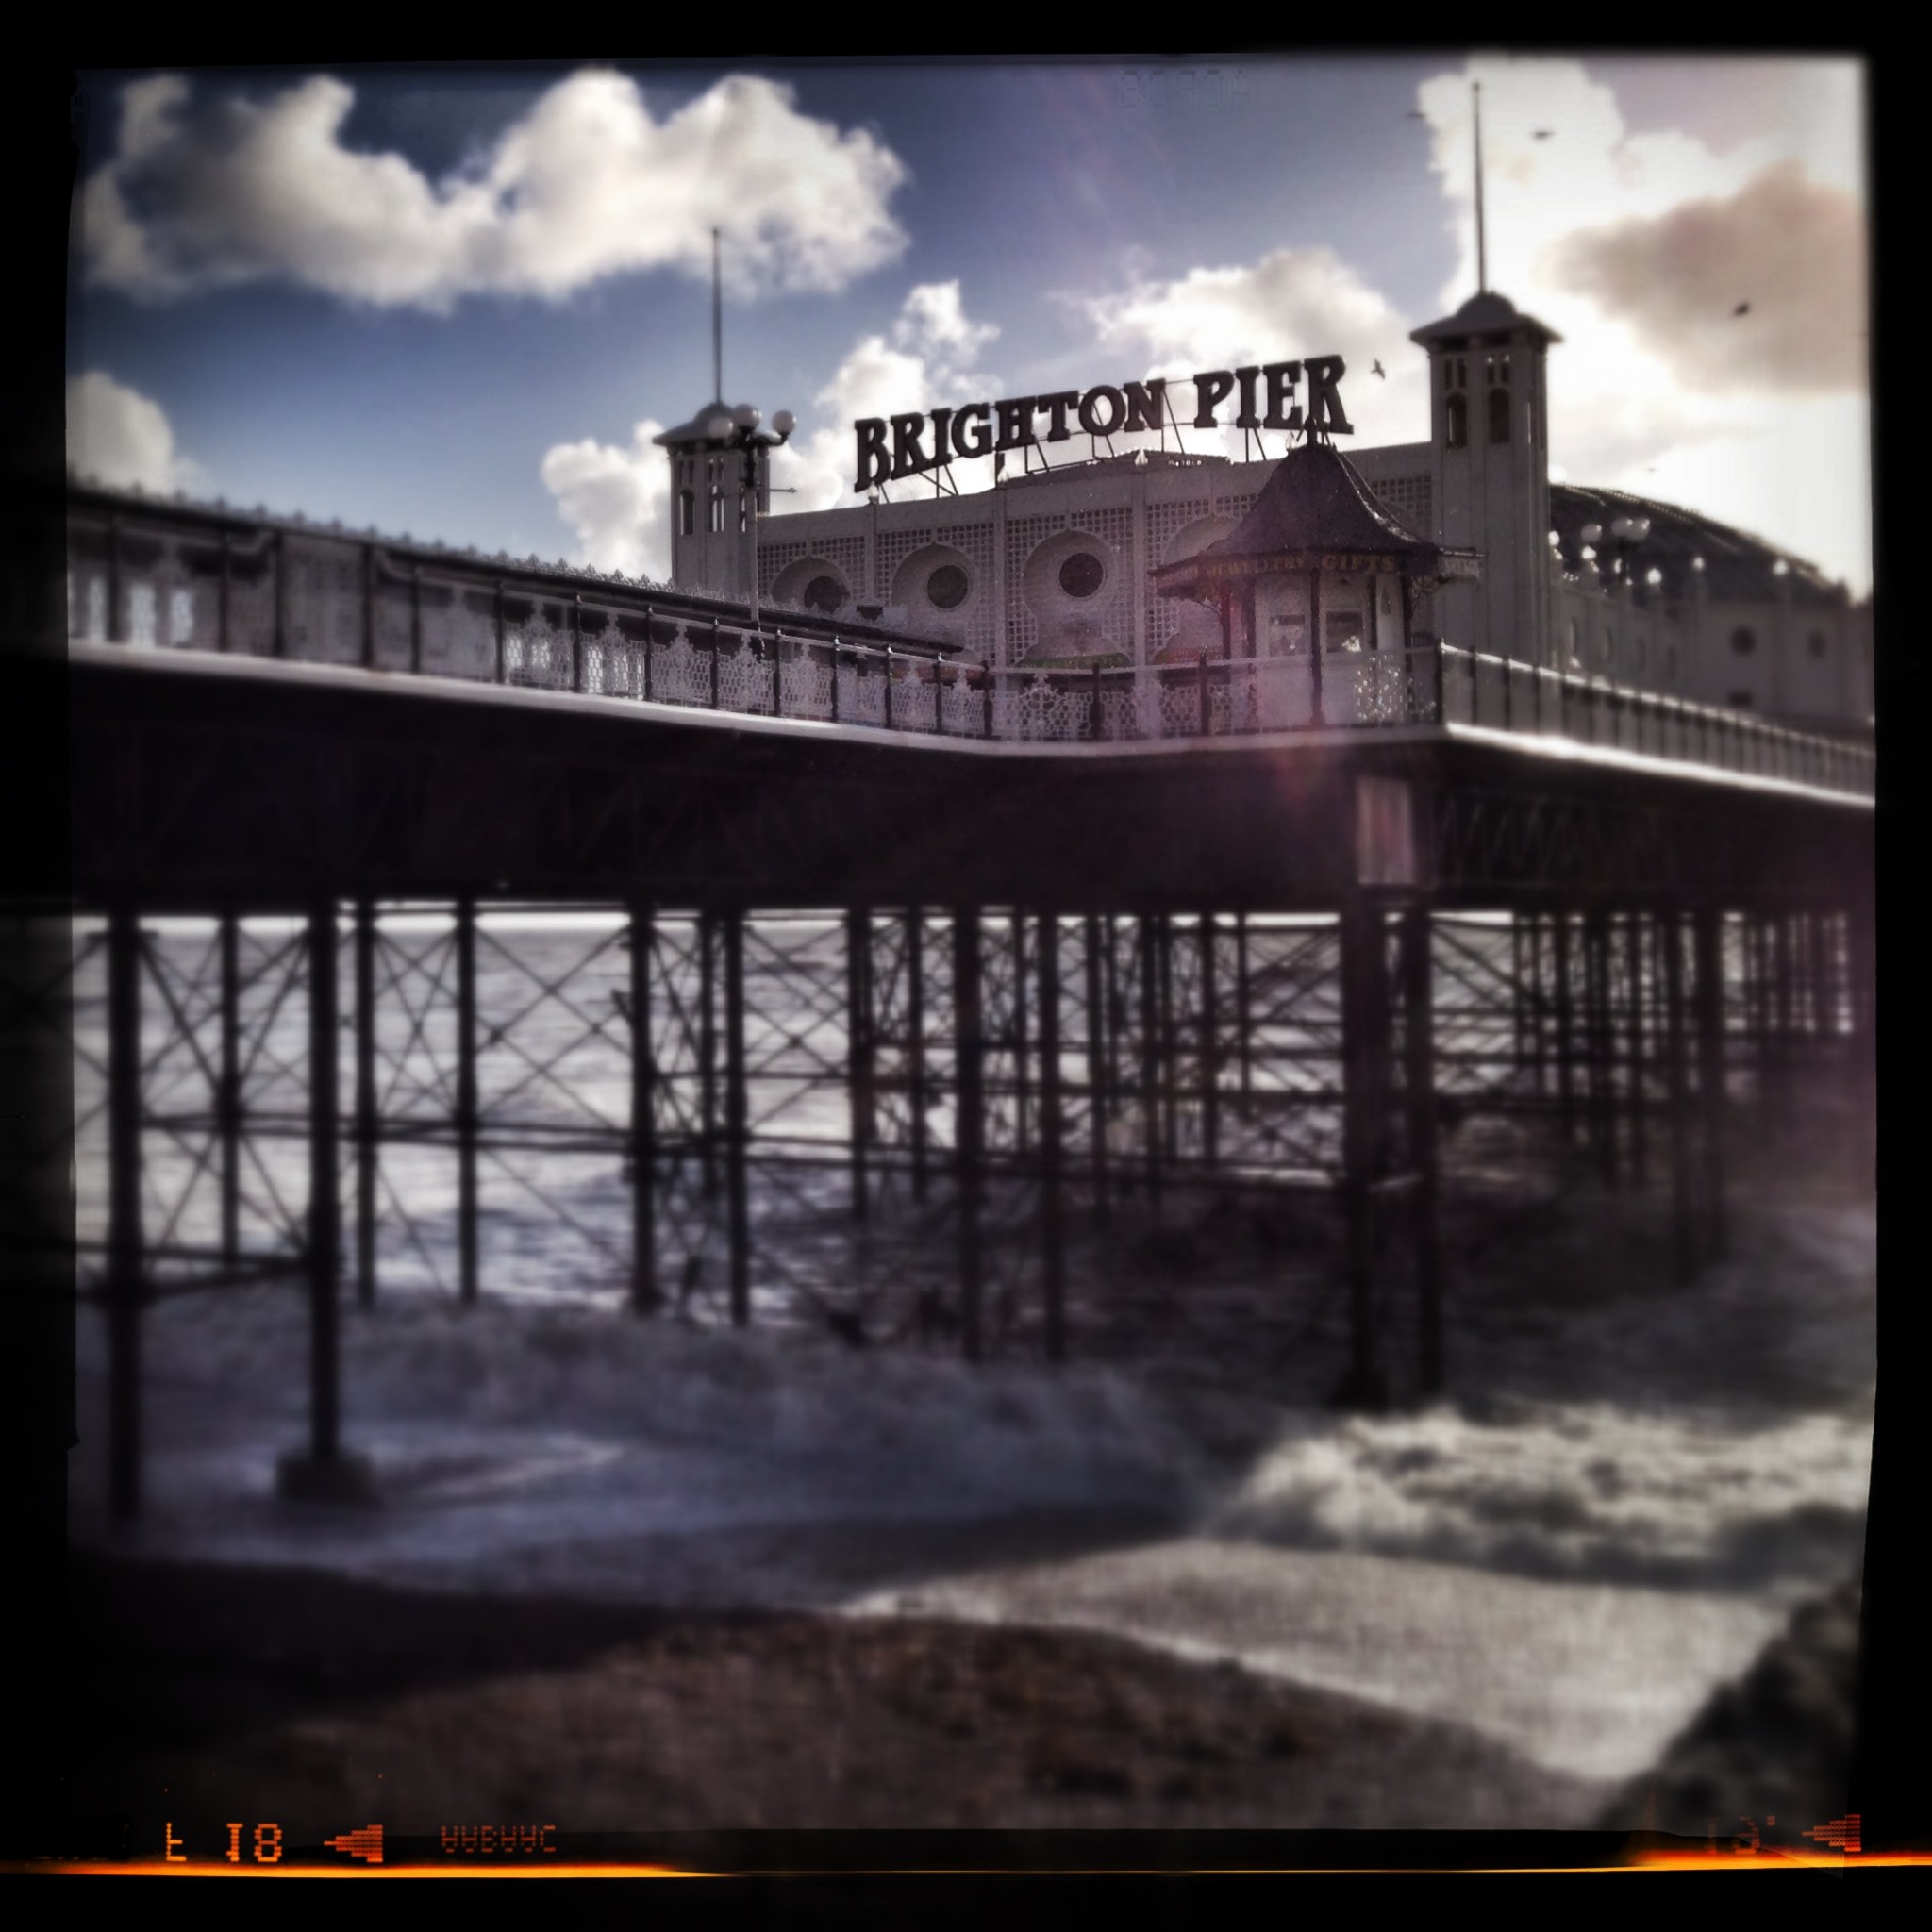 The Famous Brighton Pier by Laurent Reich